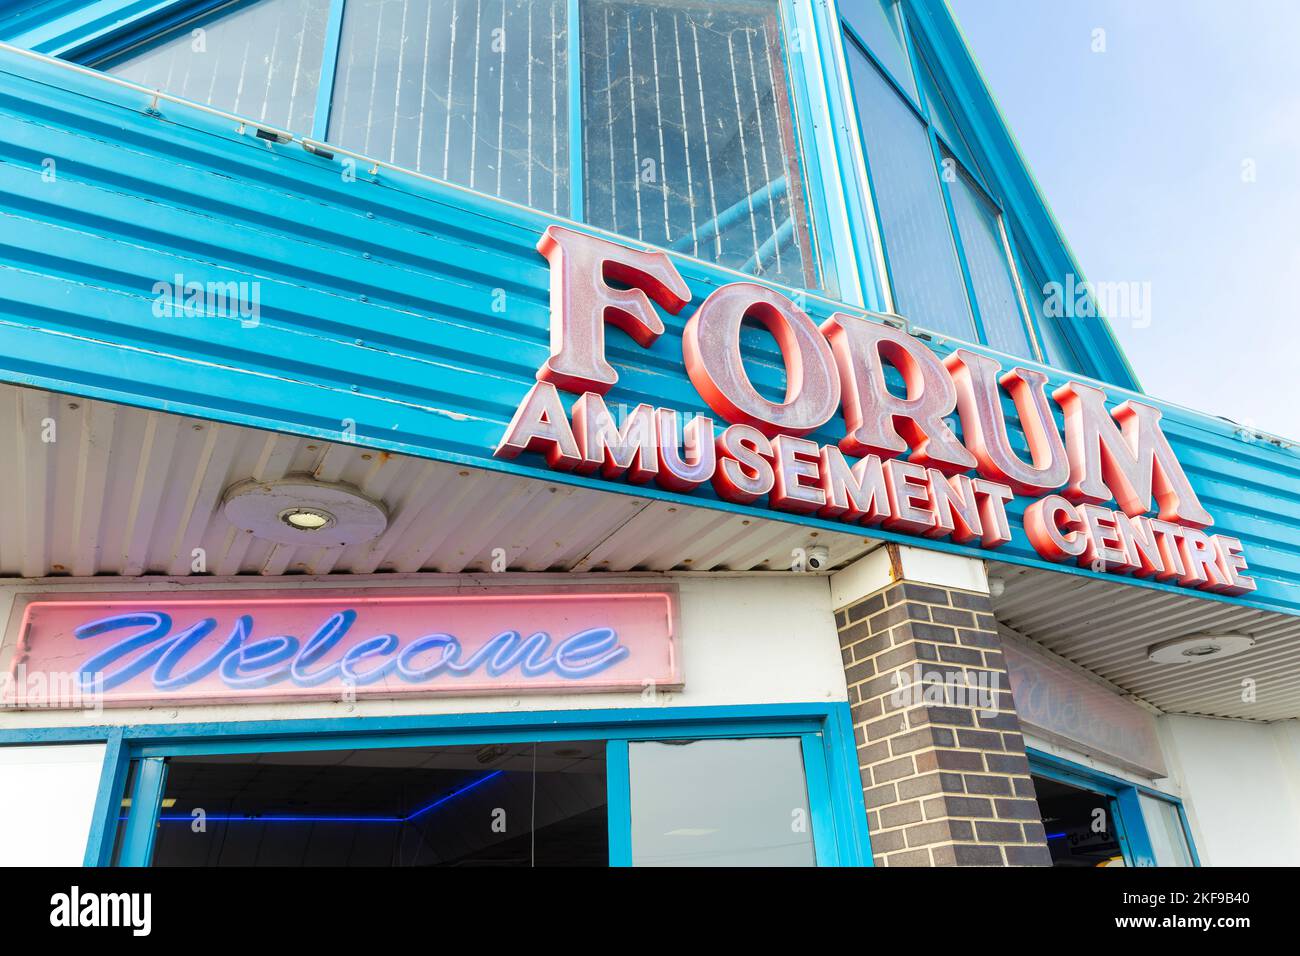 Sign for Forum amusement centre arcade, Felixstowe, Suffolk, England, UK Stock Photo